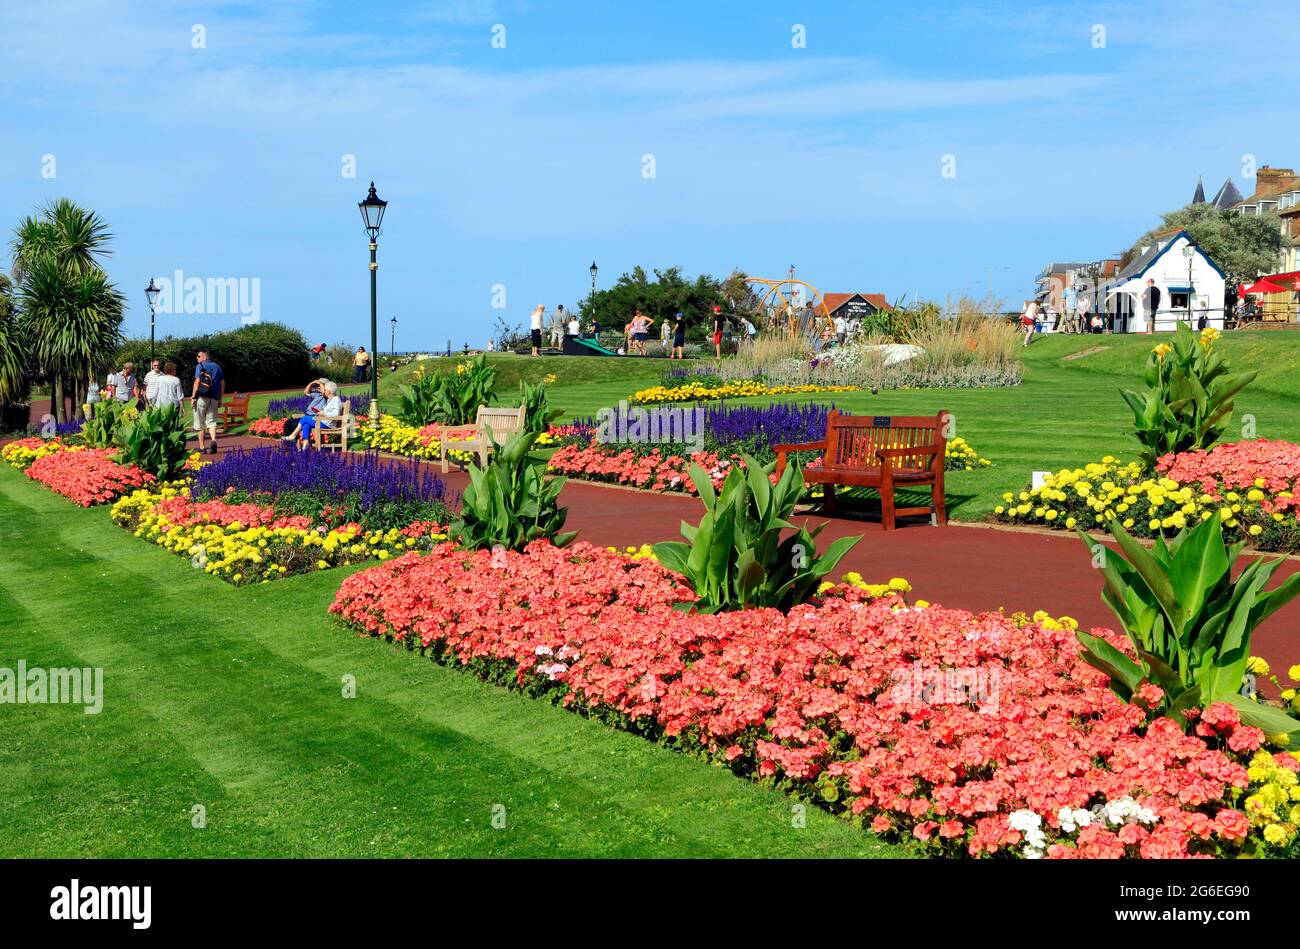 Esplanade Gardens, Cliff top, municipal garden, Hunstanton, Norfolk, England, UK, seaside resort Stock Photo